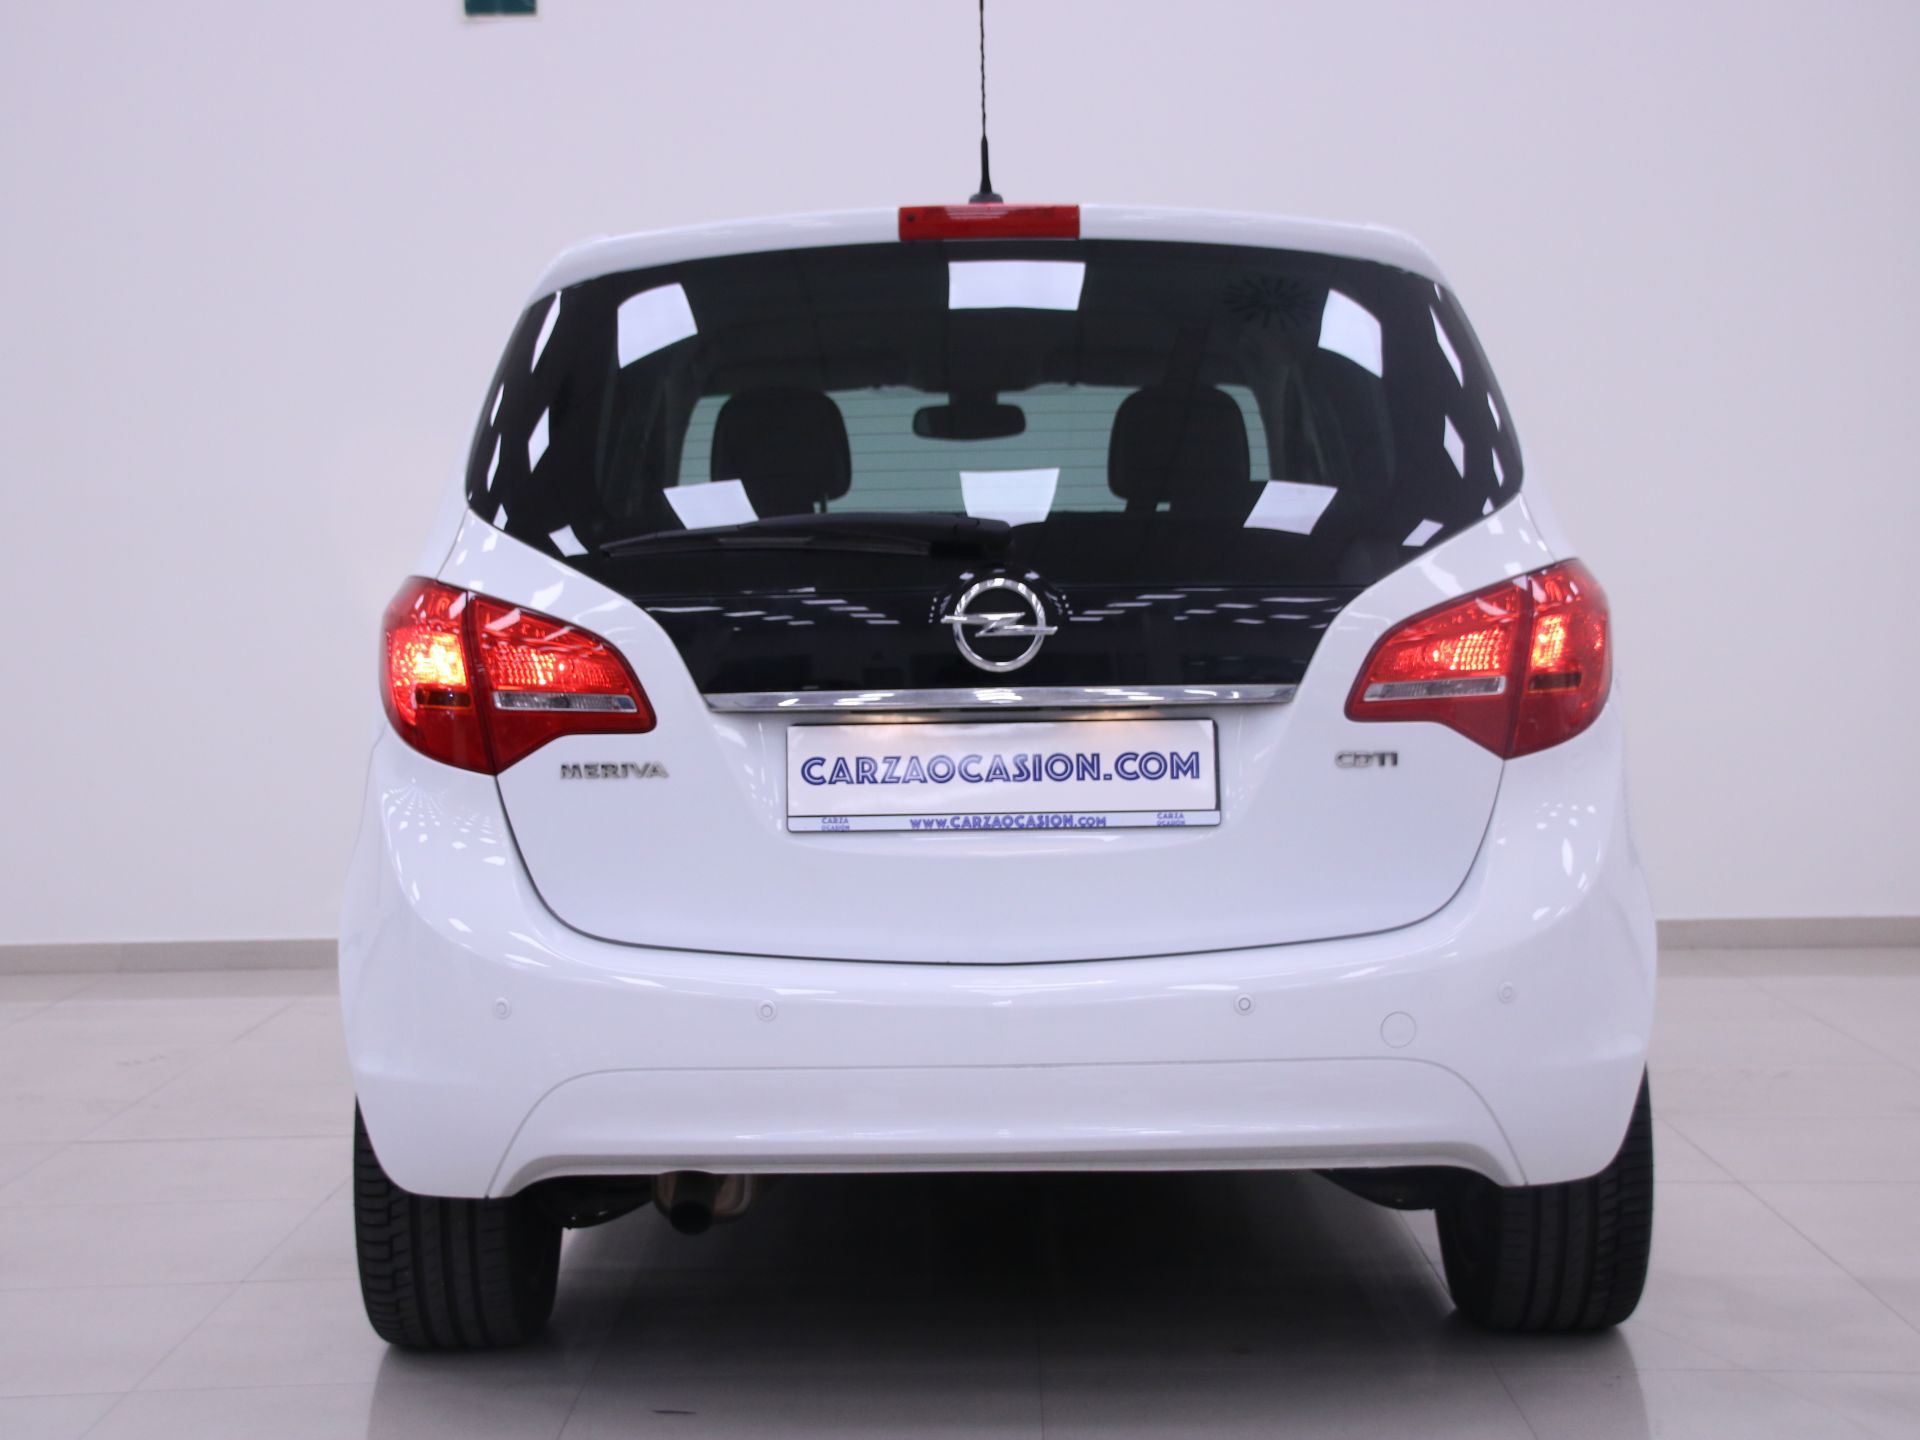 Opel Meriva 1.7 CDTI 110 CV Design Edition